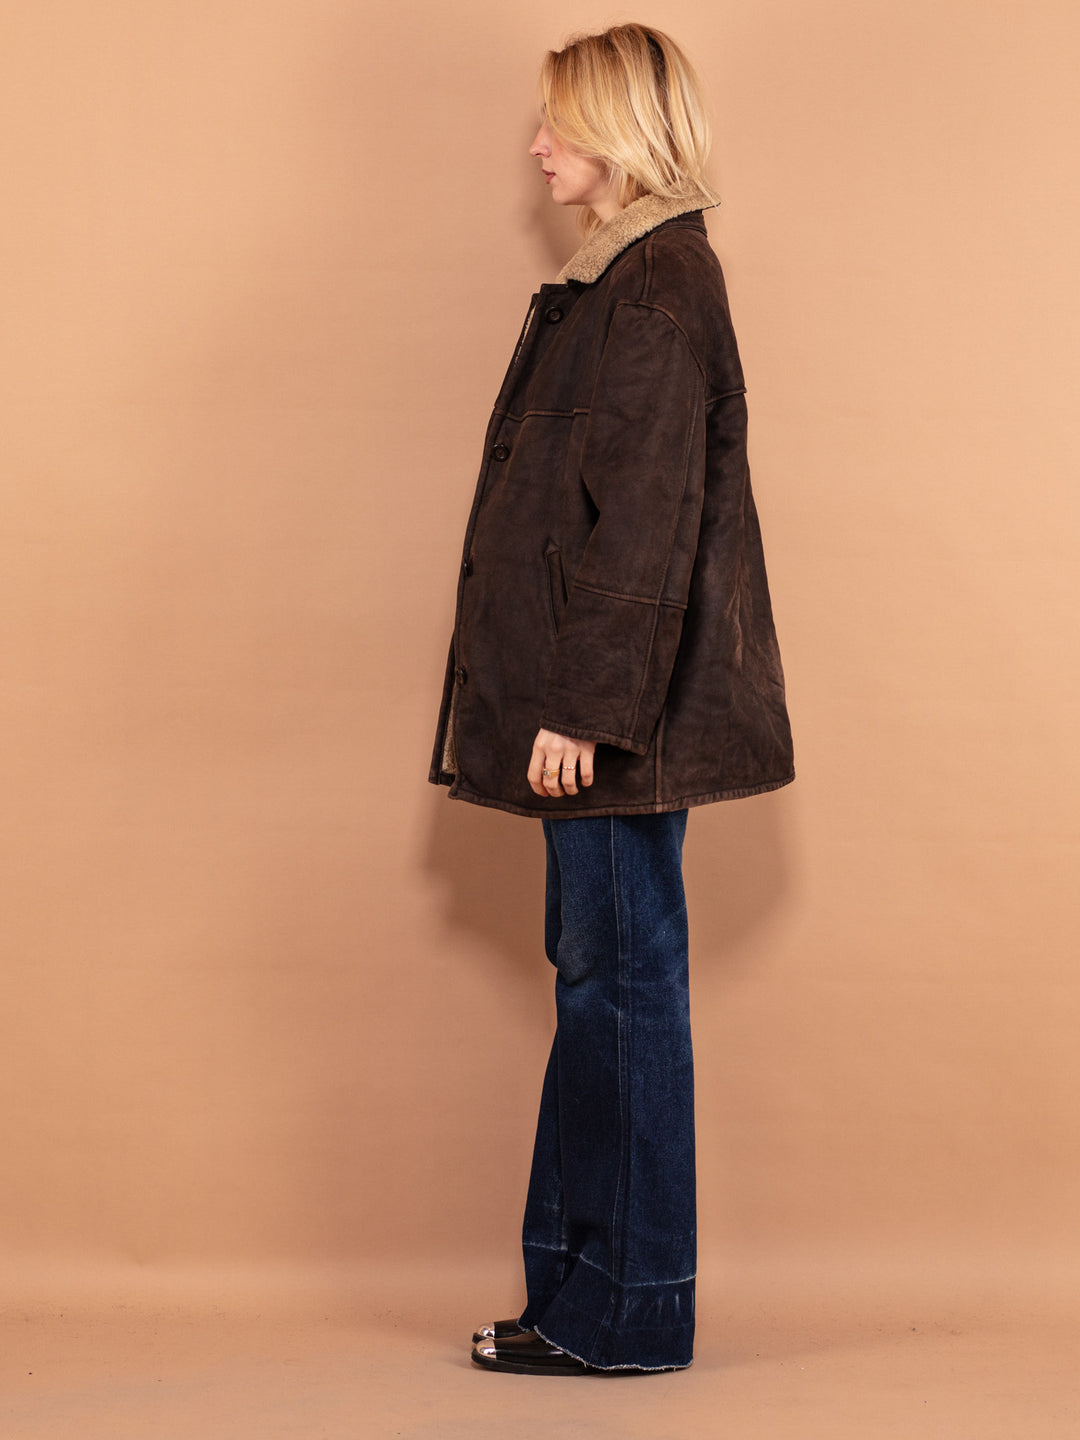 Sheepskin Shearling Coat 90s, Size XL, Sheepskin Winter Overcoat, 1990s Style Outerwear, Dark Brown Leather Coat, Casual Everyday Coat